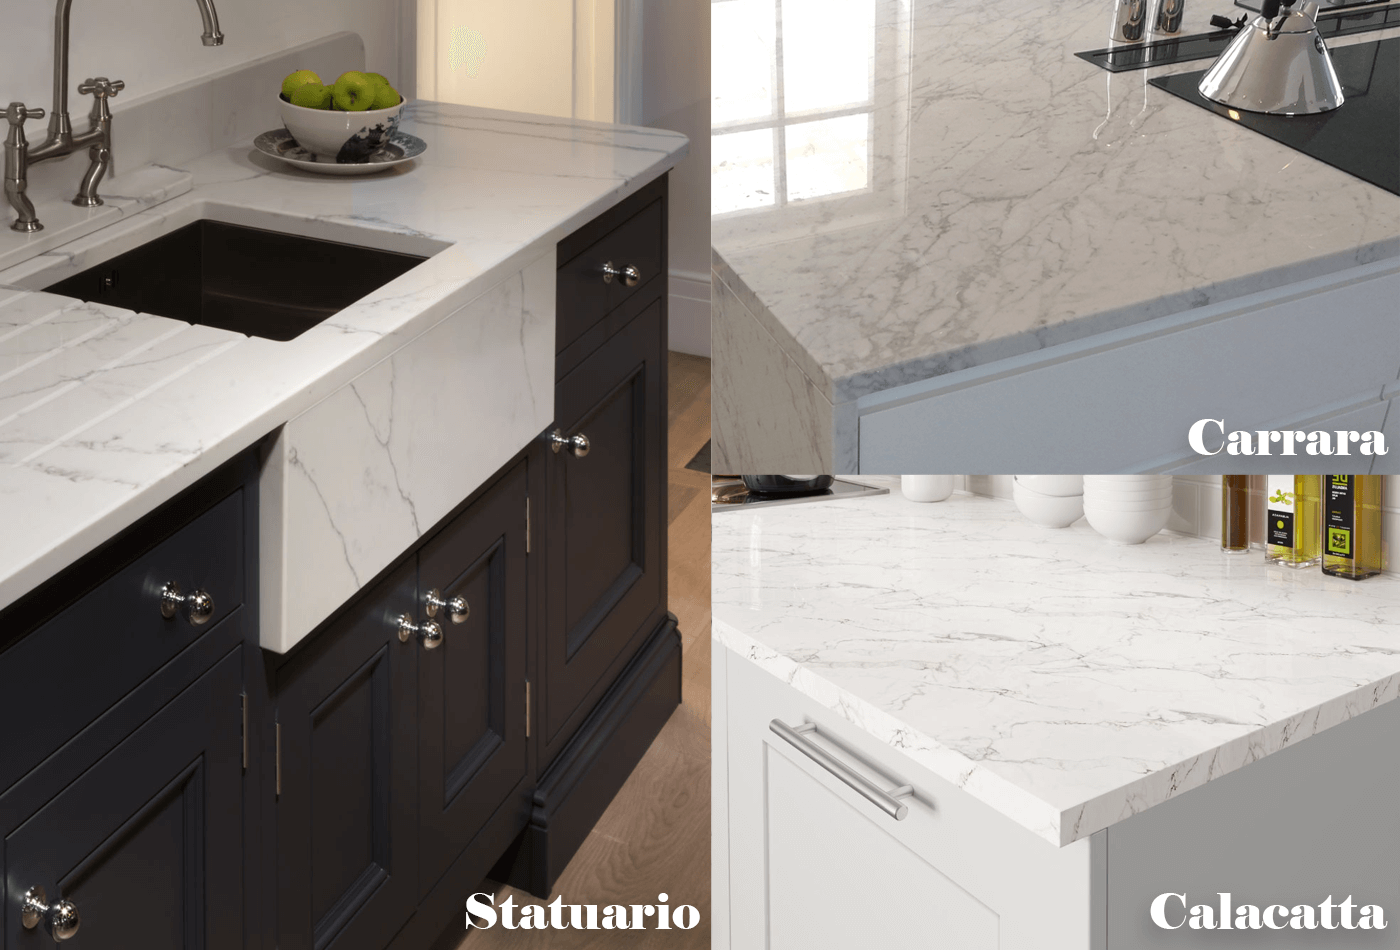 Difference Between Carrara And Calacatta And Statuario